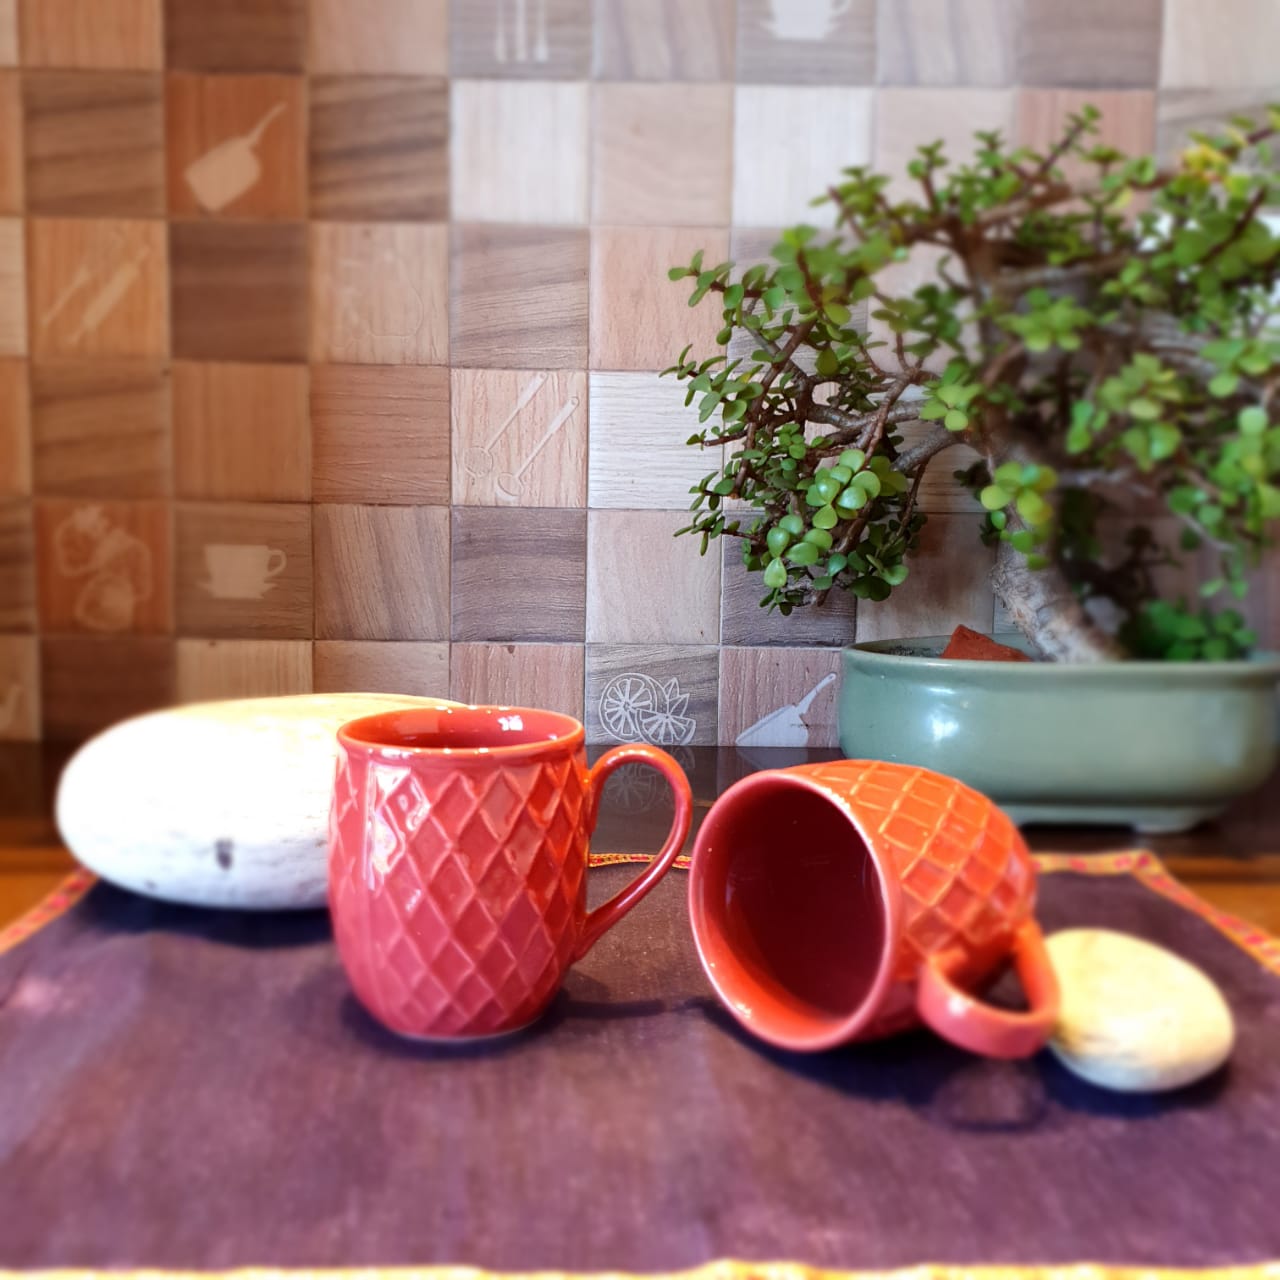 Maroon Criss Cross Pattern Ceramic Mugs, Set of 2, Coffee and Tea Mugs, Soup Mugs 240 Ml Each